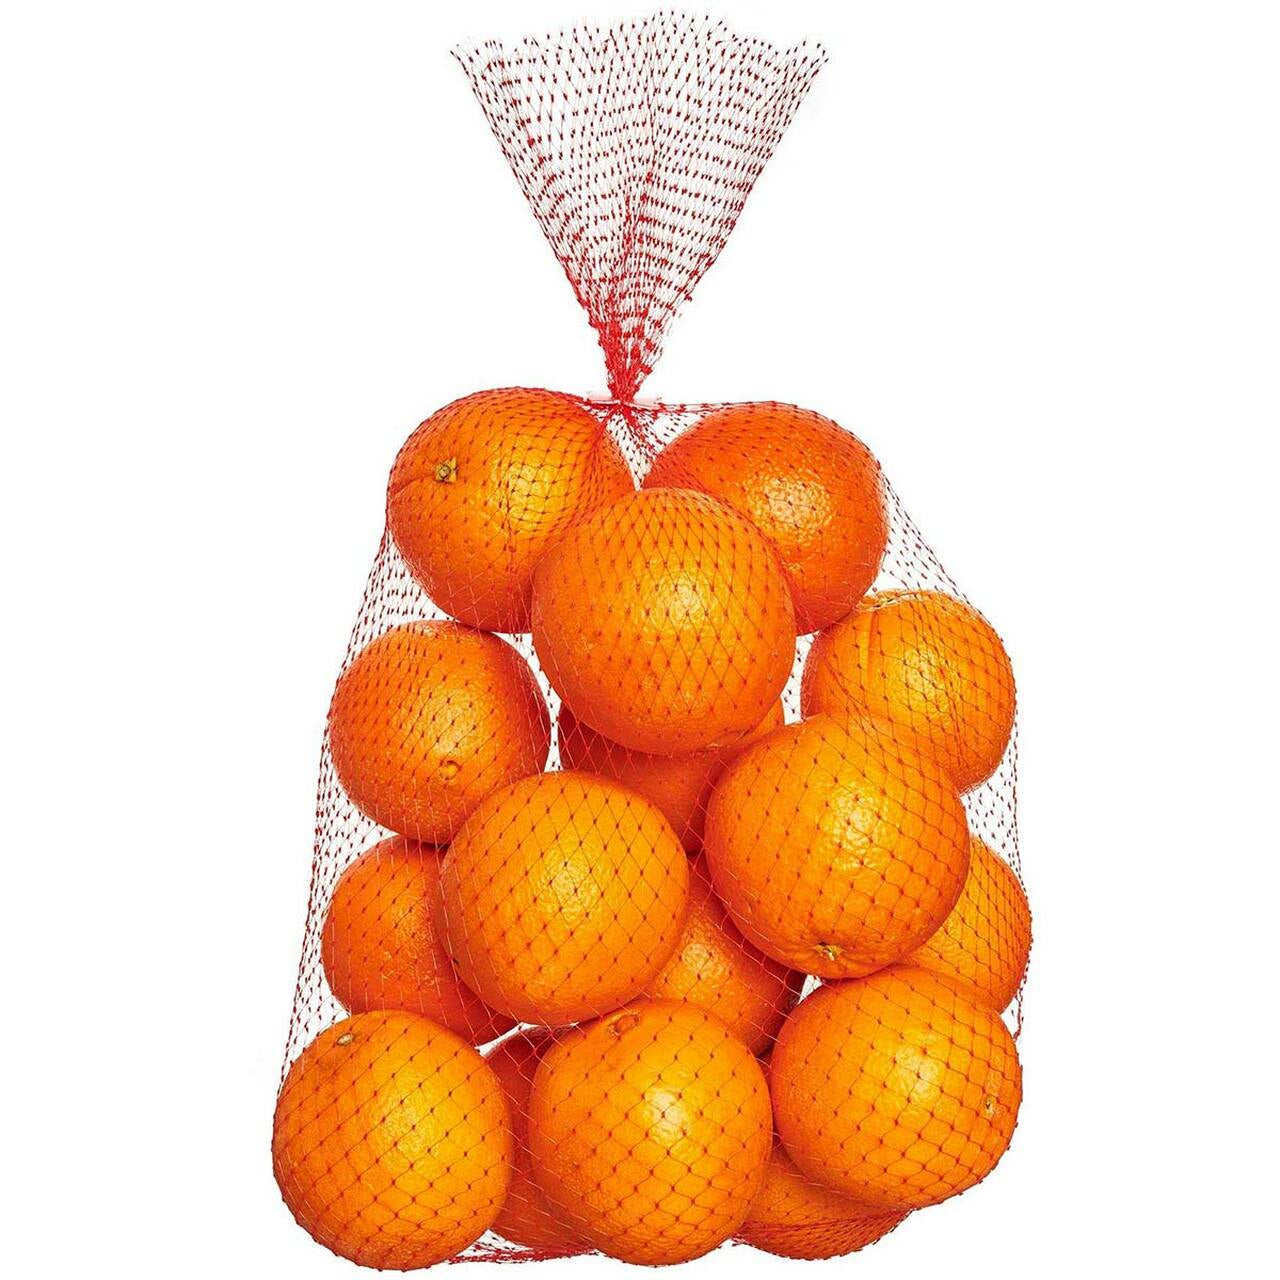 Navel Oranges 4lbs